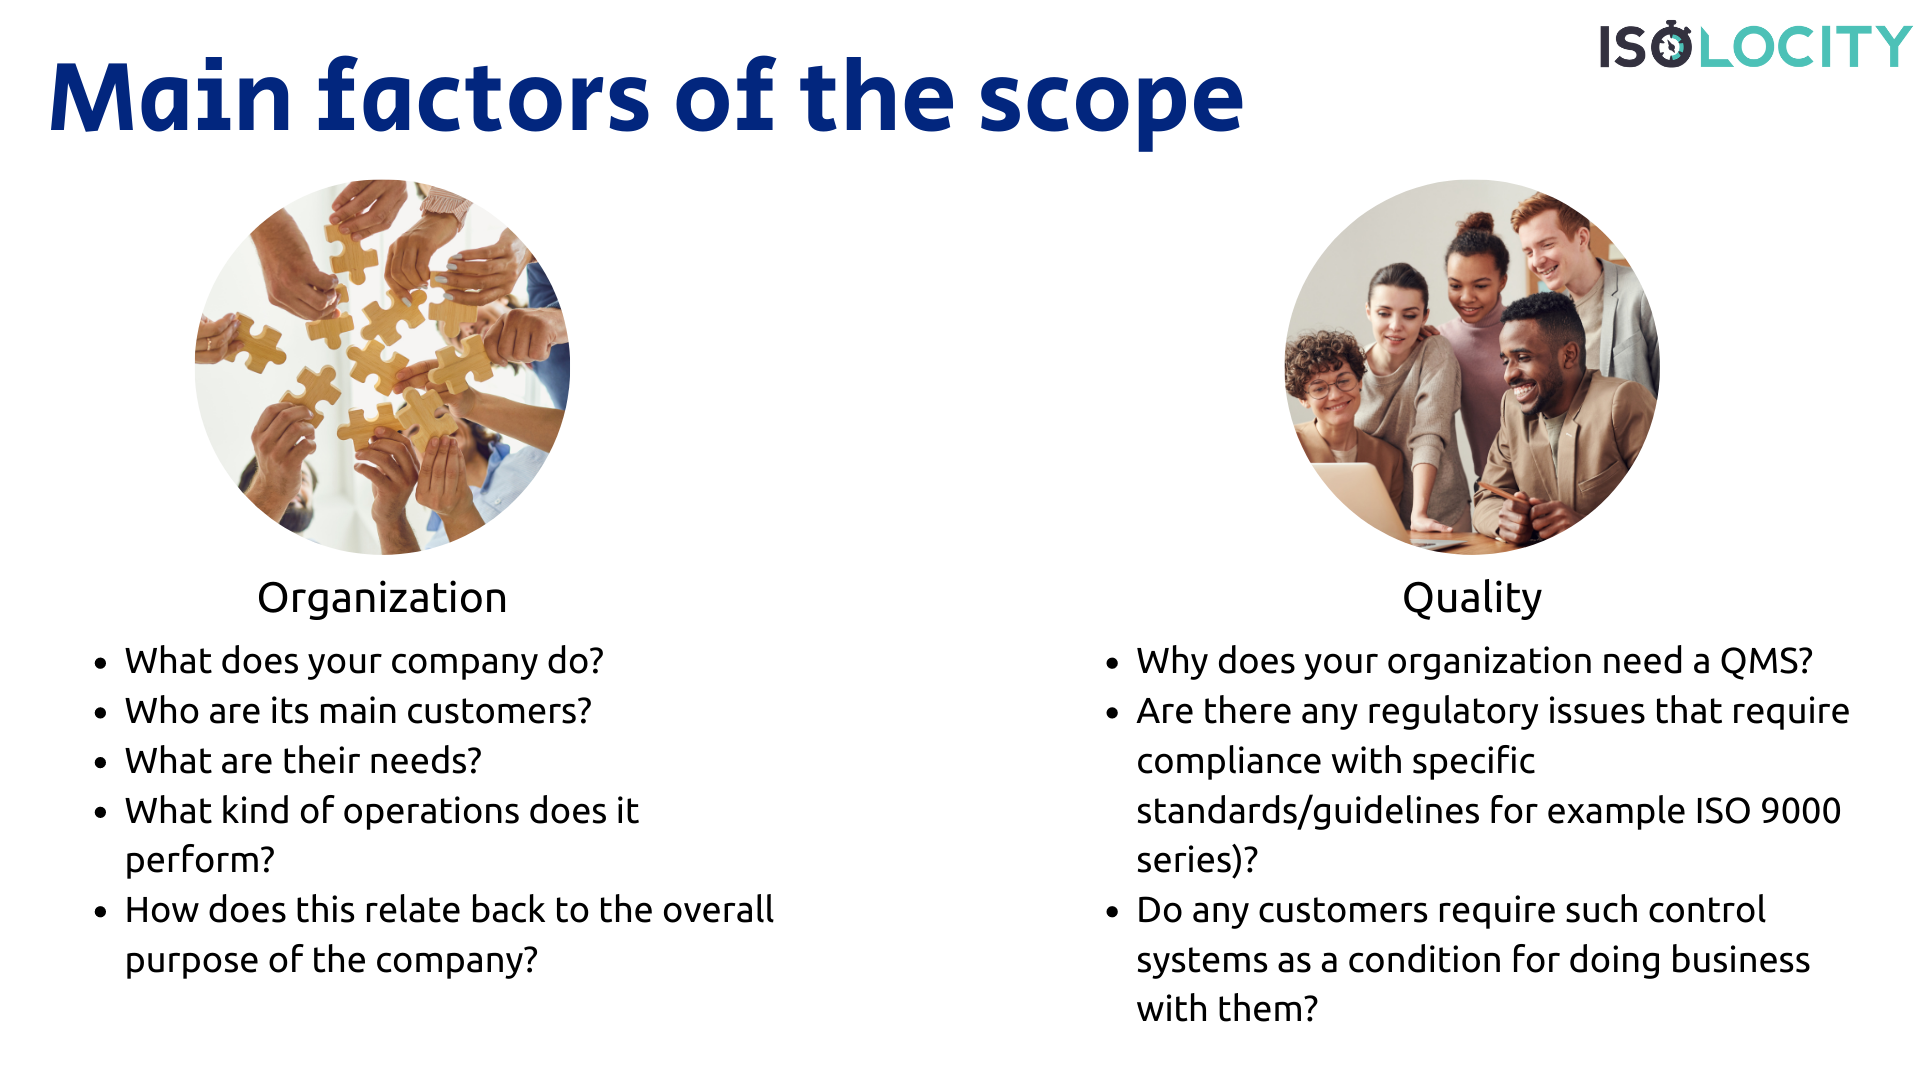 Main factors of the scope